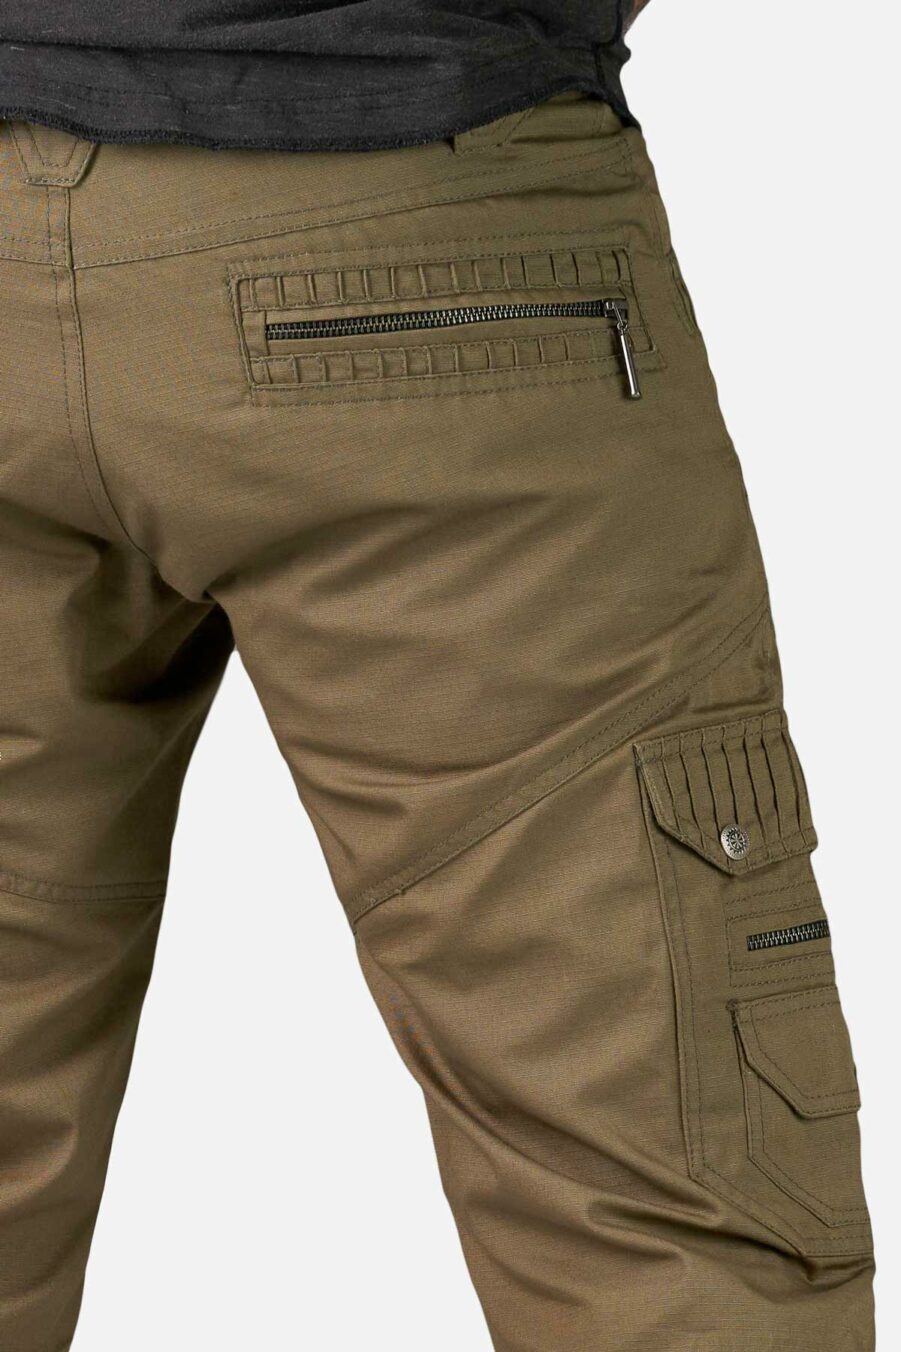 short-inizio-pants-olive-green-for-men-with-many-zip-pockets-secret-pocket-alternative-streetwear-and-festival-fashion-avanyah-clothing